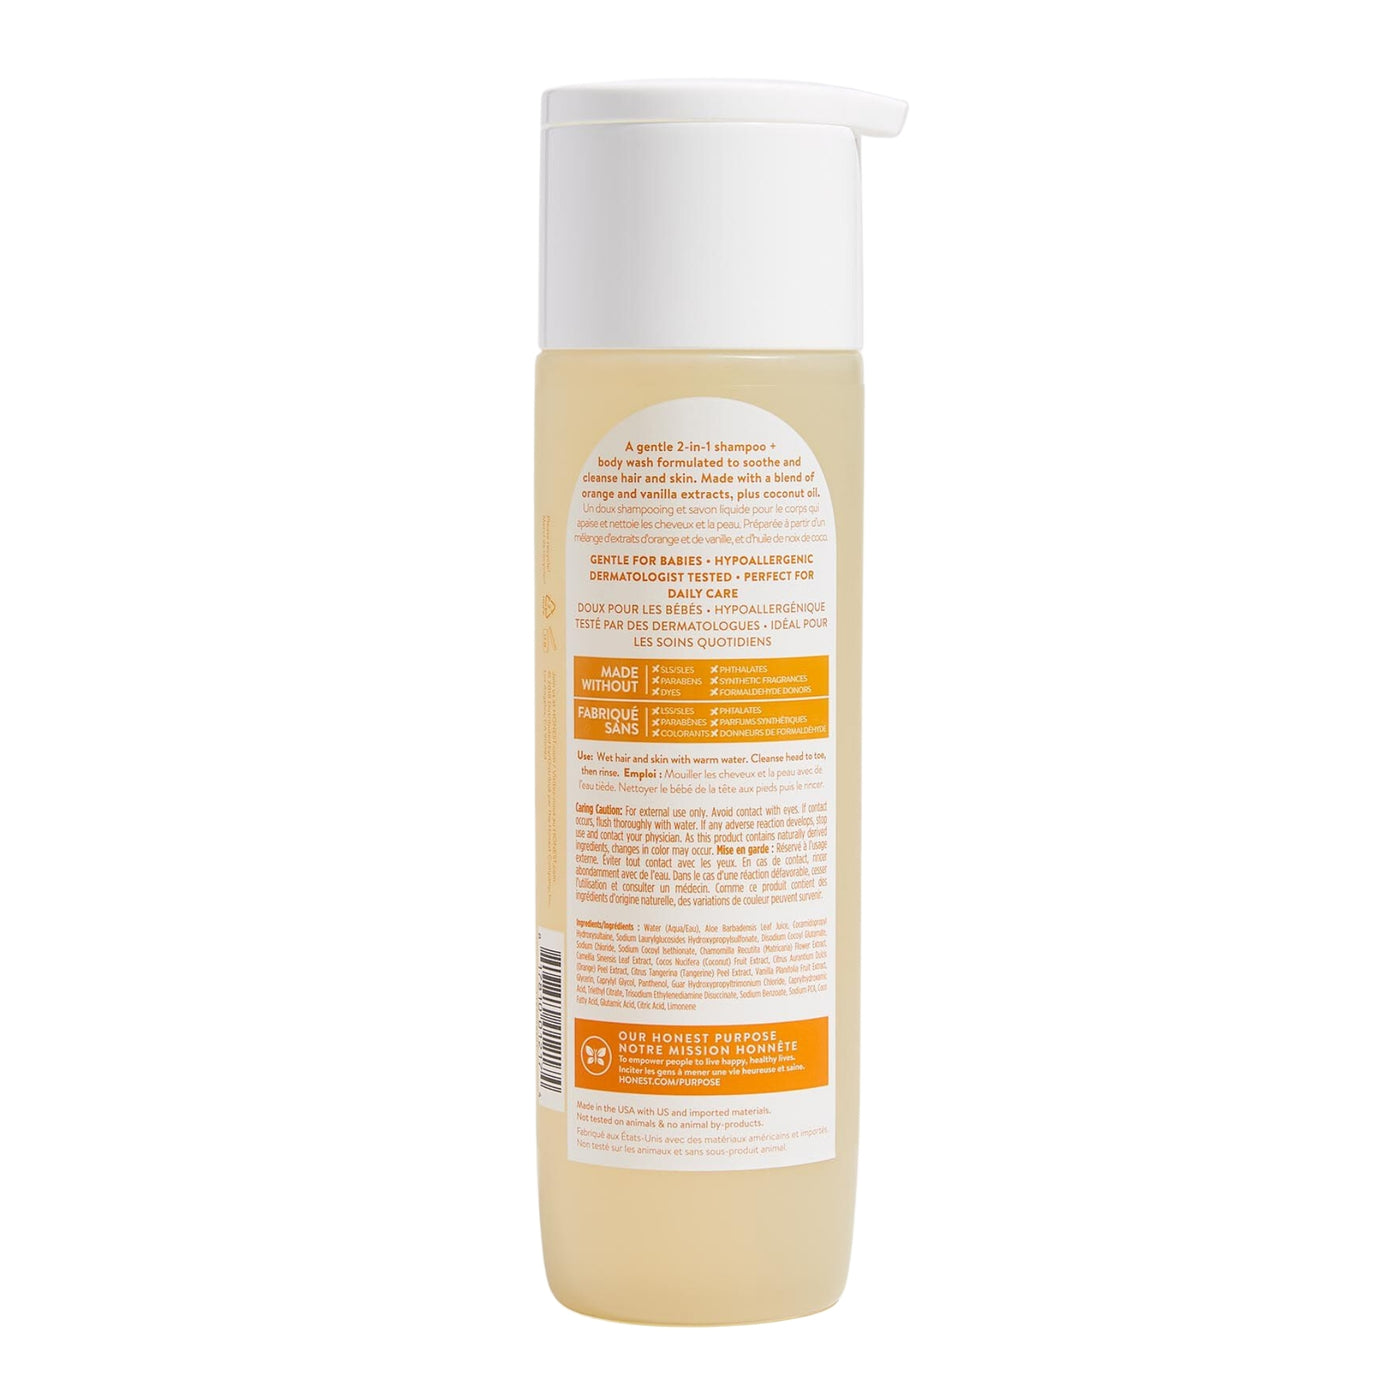 Sweet Orange Vanilla Shampoo/Body Wash - 296ml